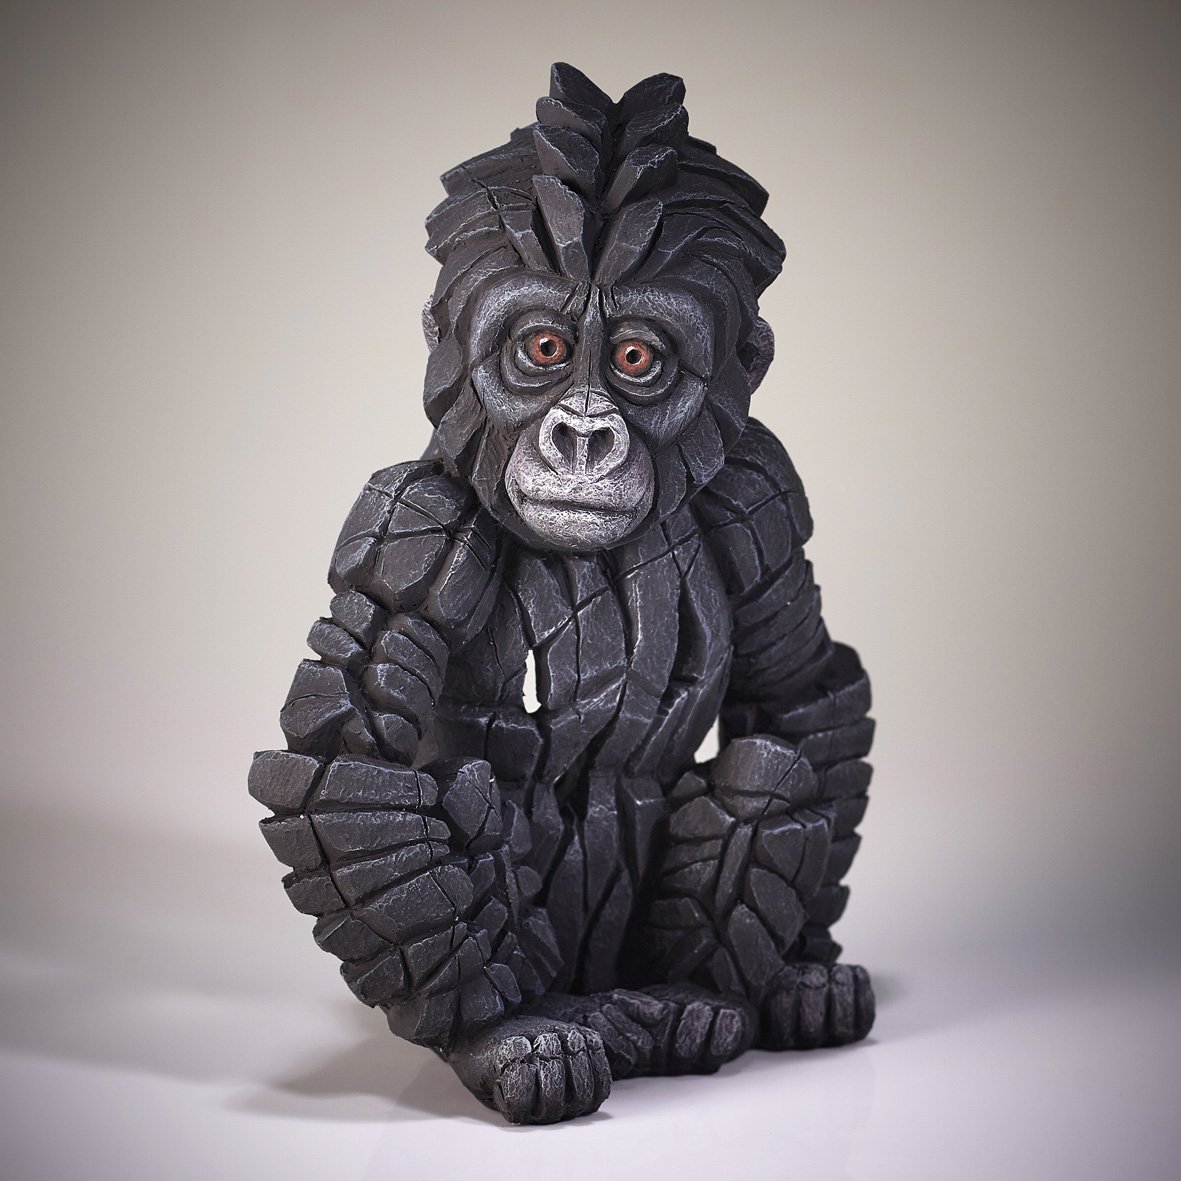 Edge Baby Gorilla Sculpture By Matt Buckley